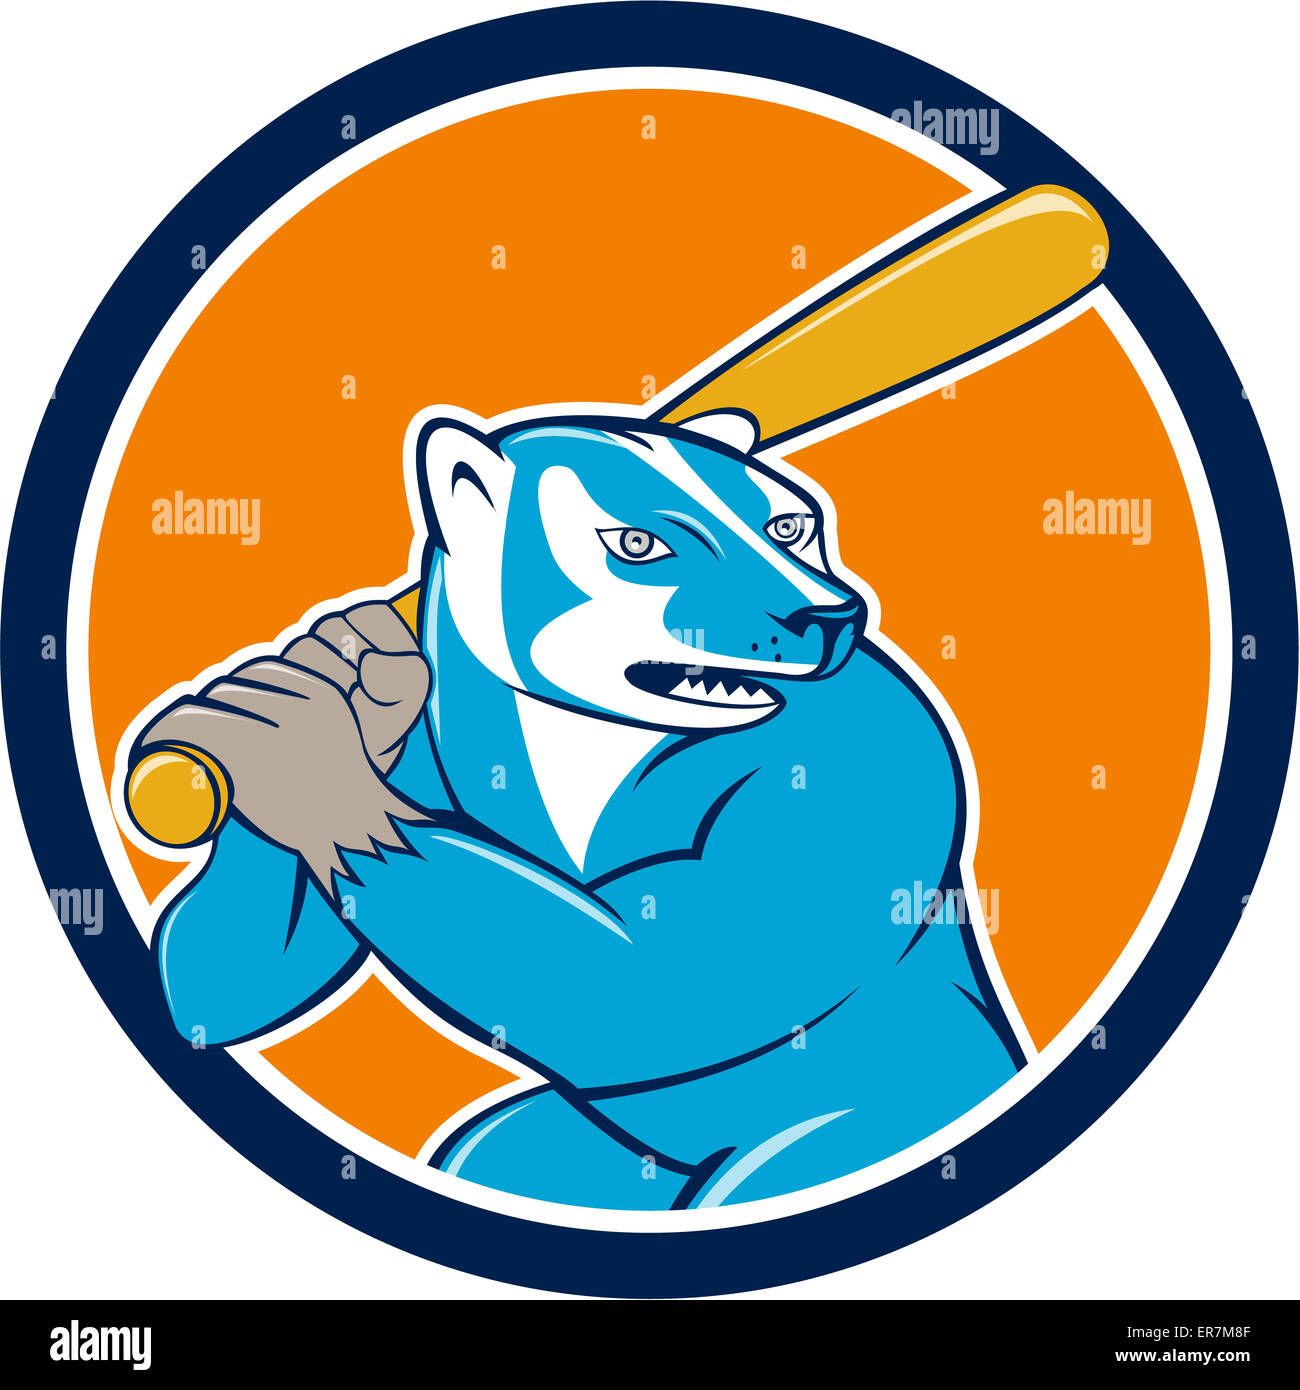 Illustration of a badger baseball player holding bat batting set inside circle on isolated background done in cartoon style. Stock Photo